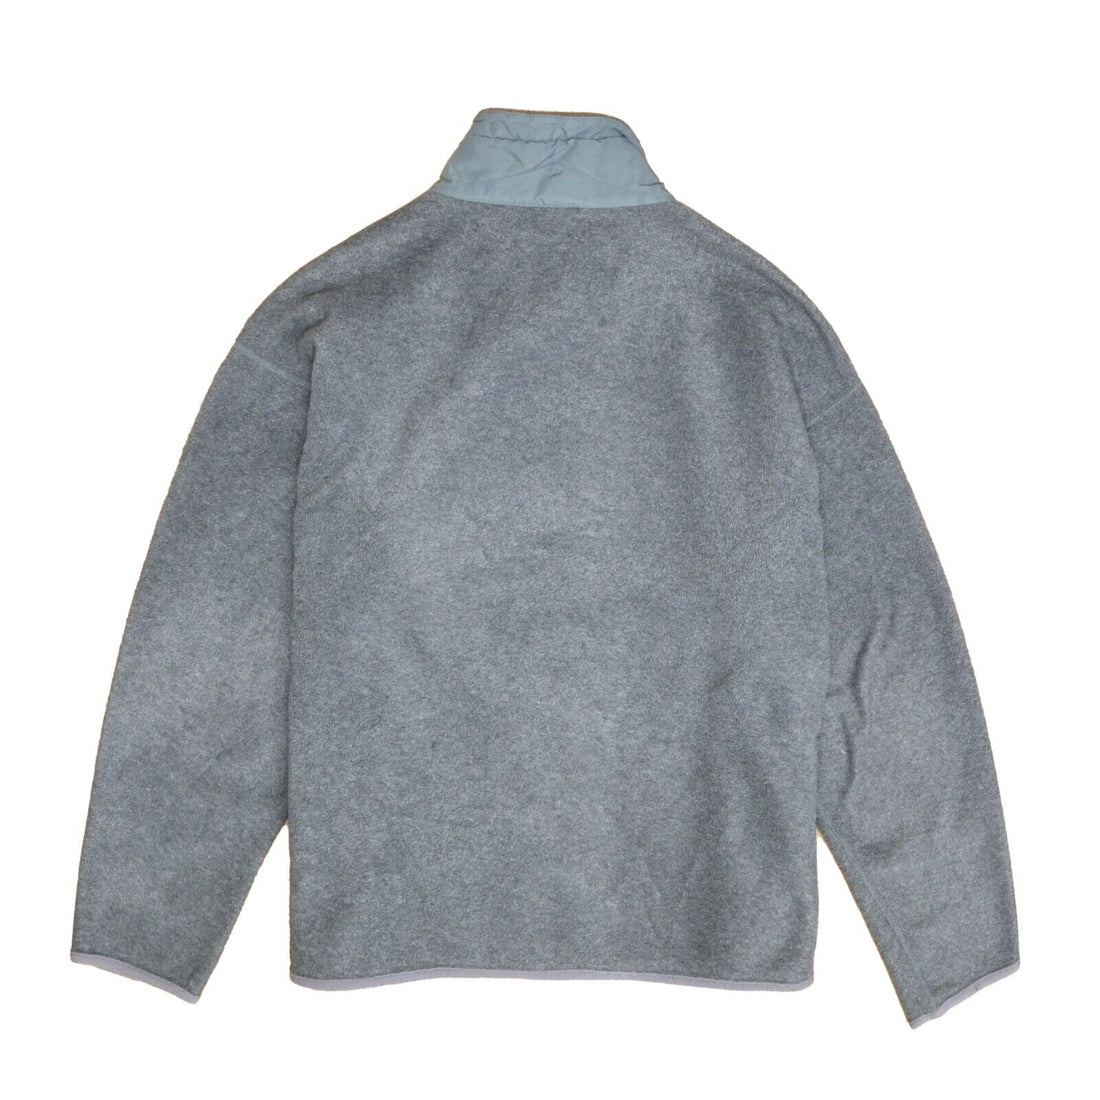 Vintage Patagonia Fleece Jacket Size Medium Gray Full Zip 90s